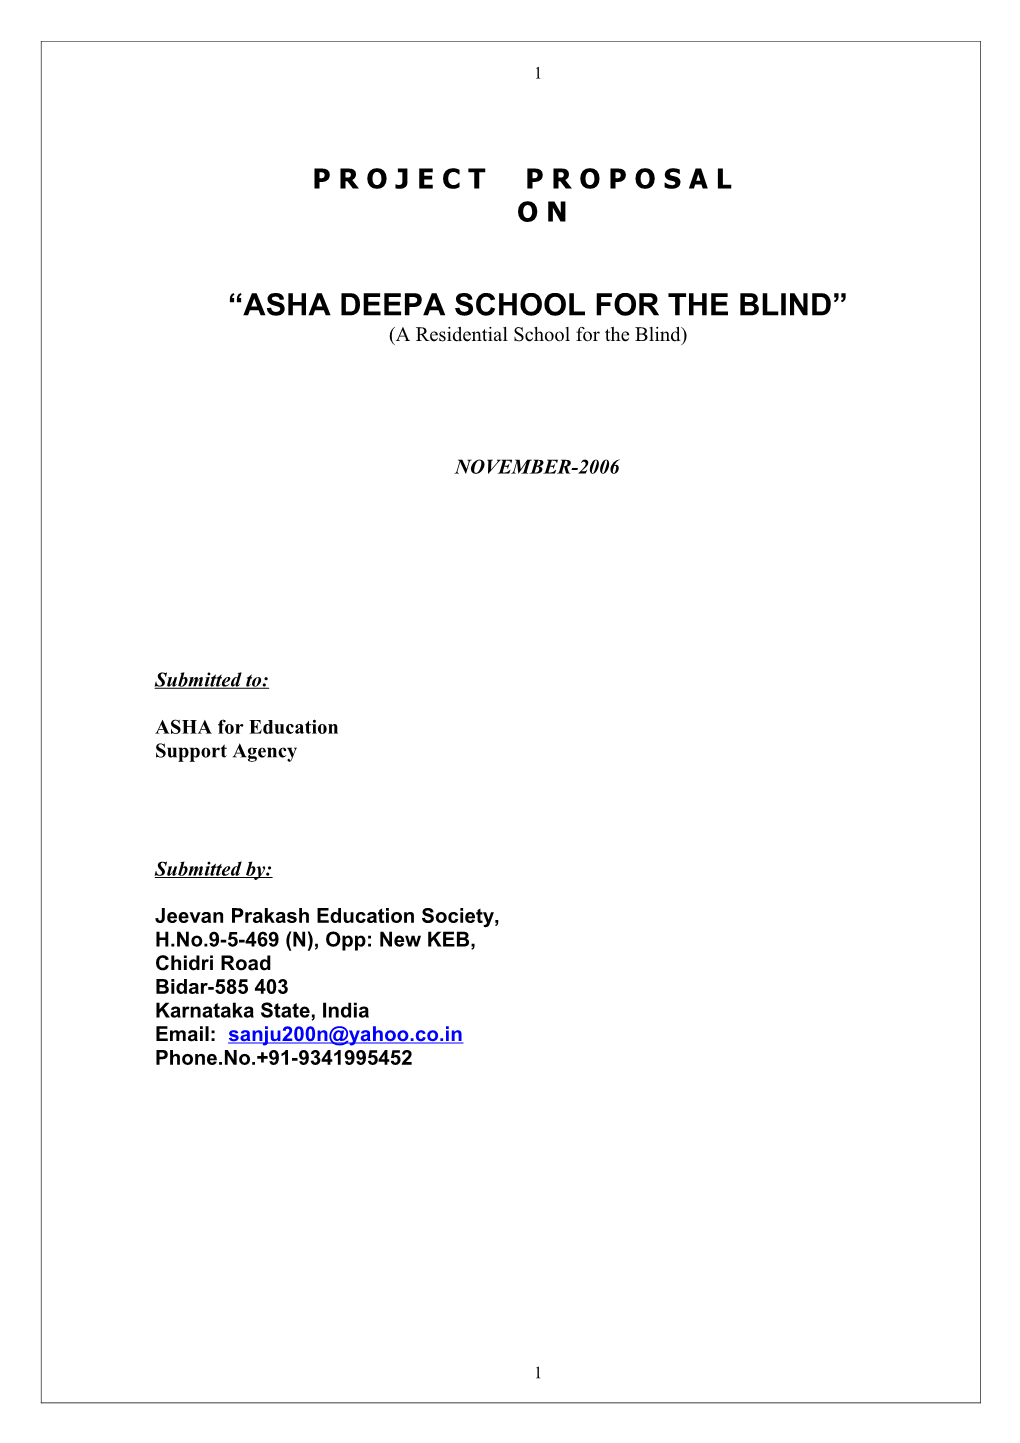 Ashadeepaschool for the Blind